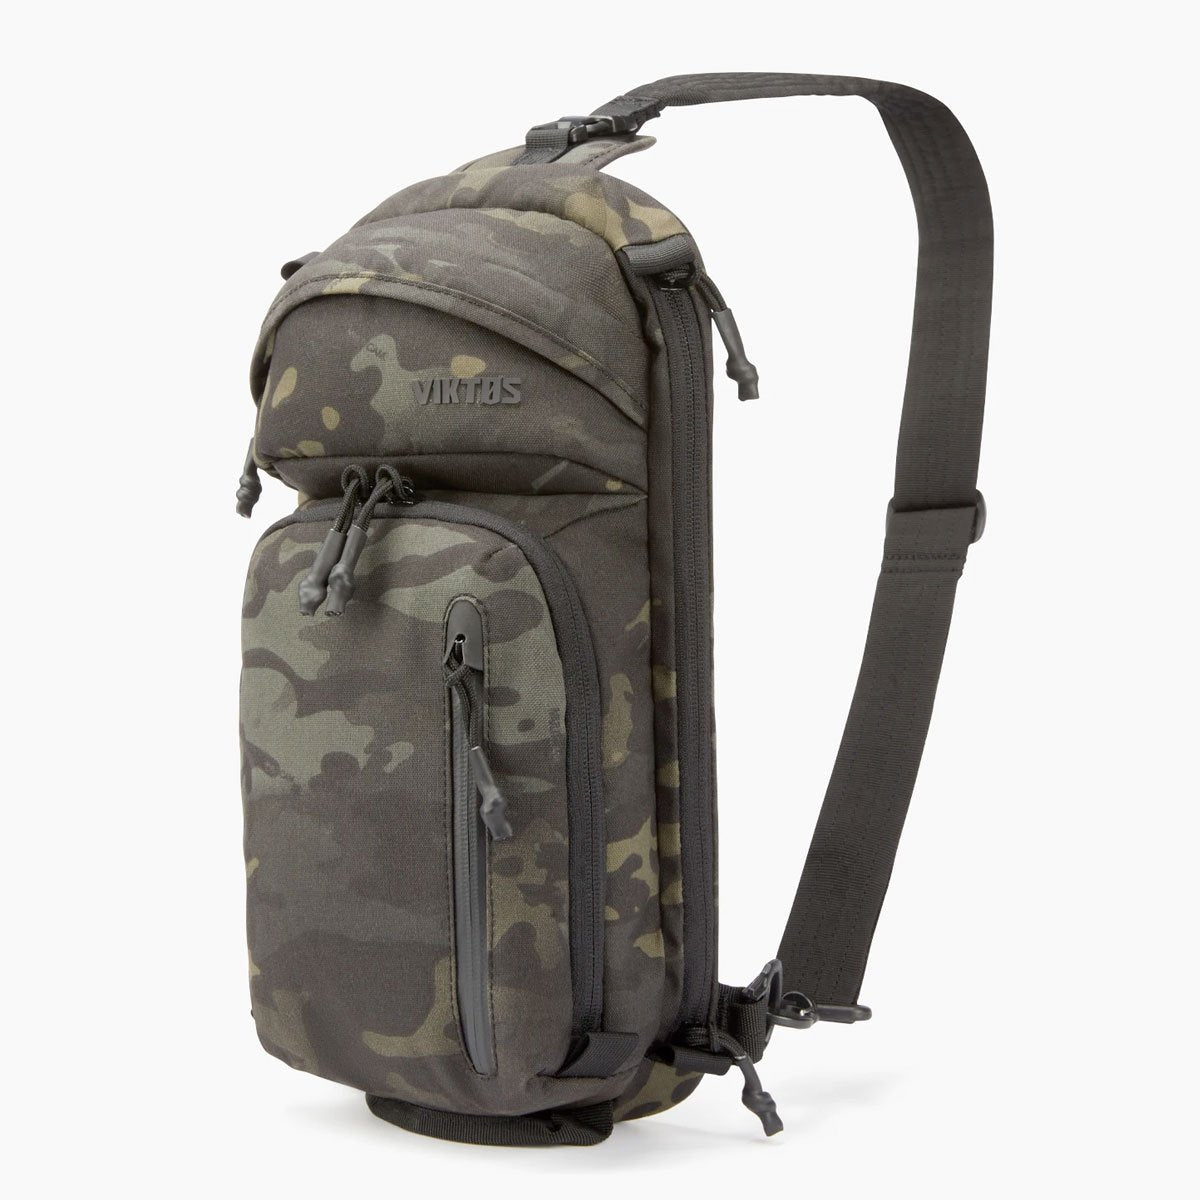 VIKTOS Upscale 2 Sling Bag Bags, Packs and Cases VIKTOS Black Multicam Tactical Gear Supplier Tactical Distributors Australia